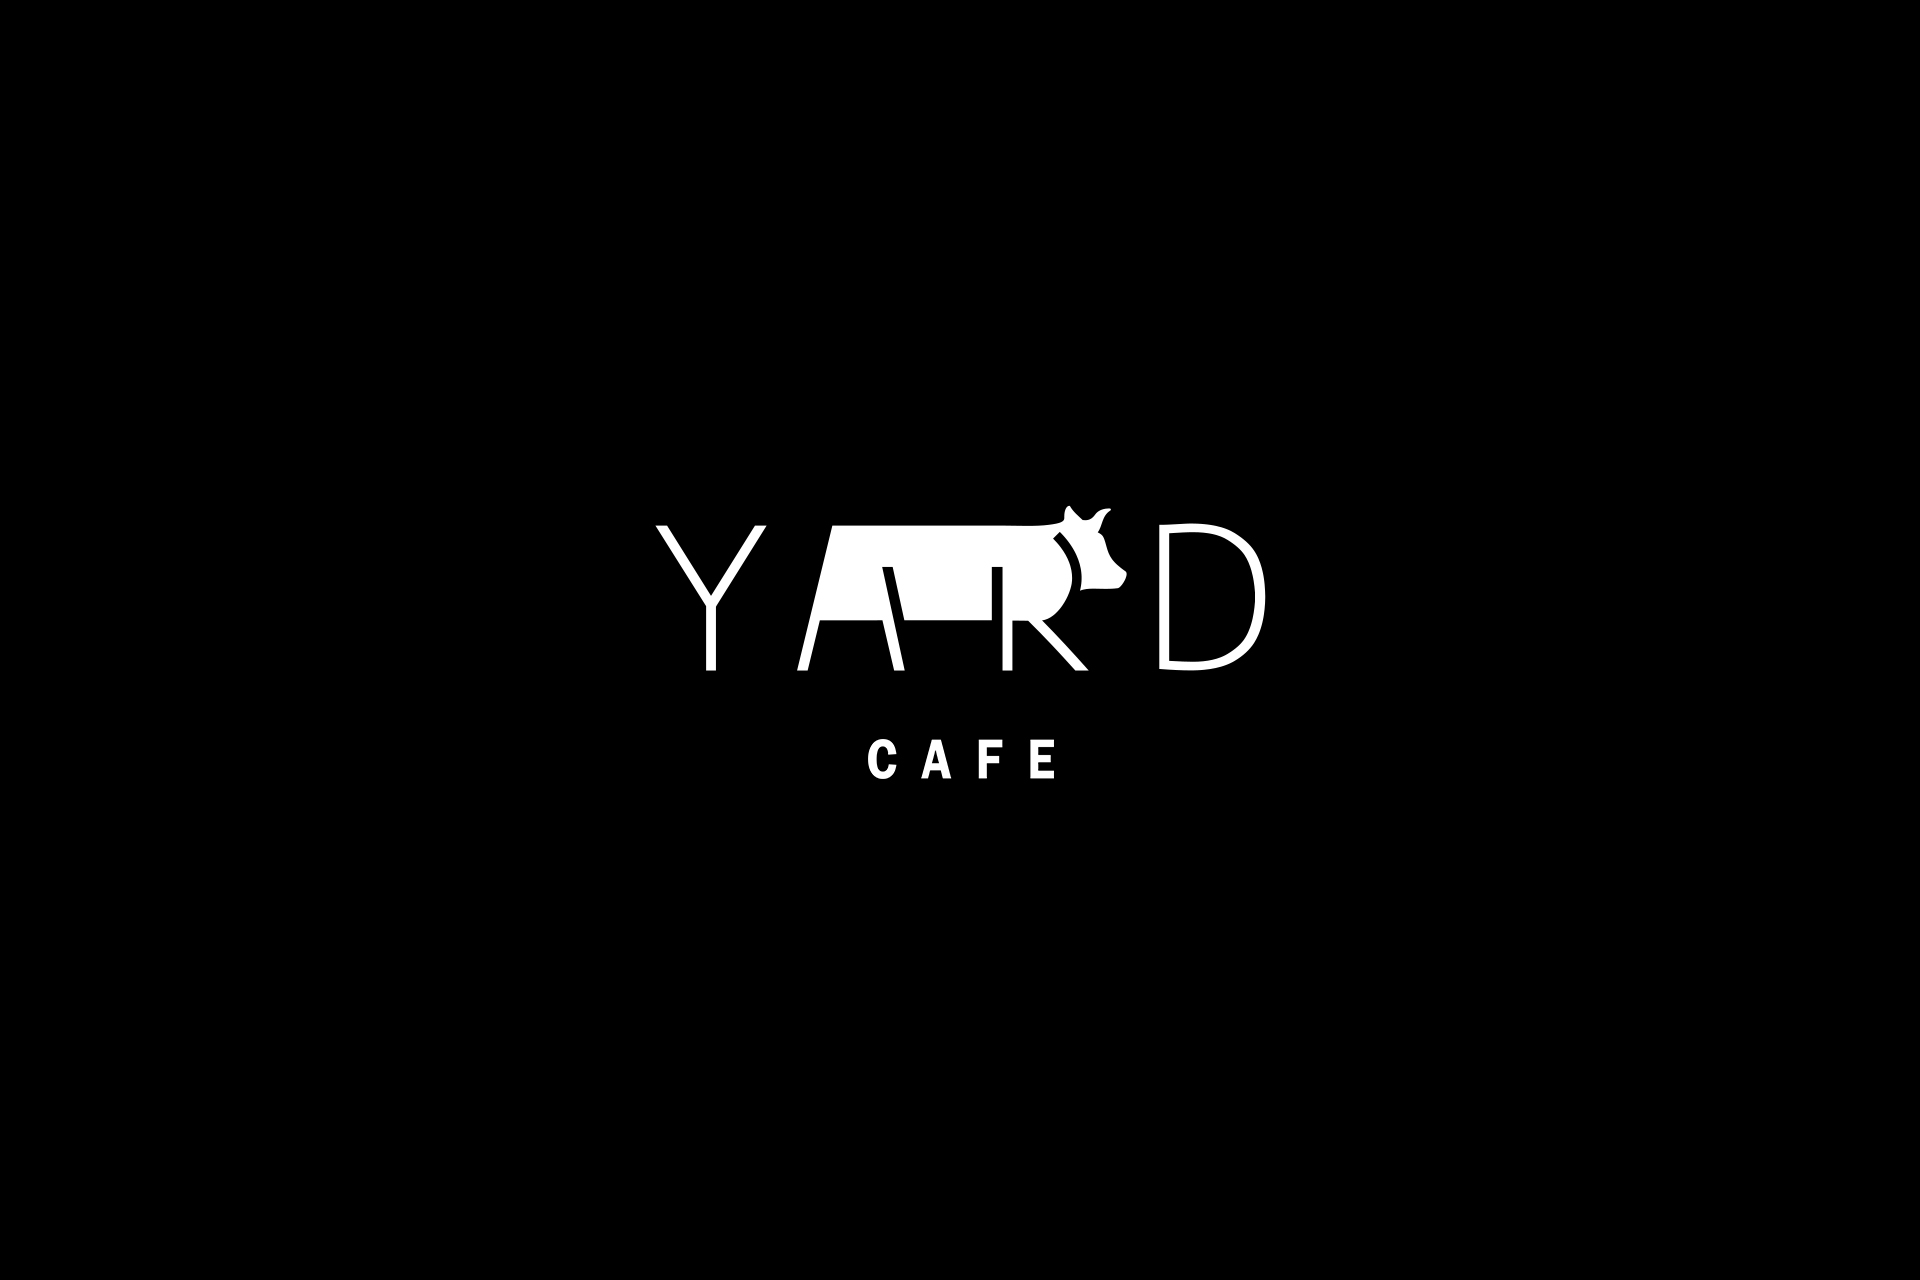 Logo design for the Yard Cafe